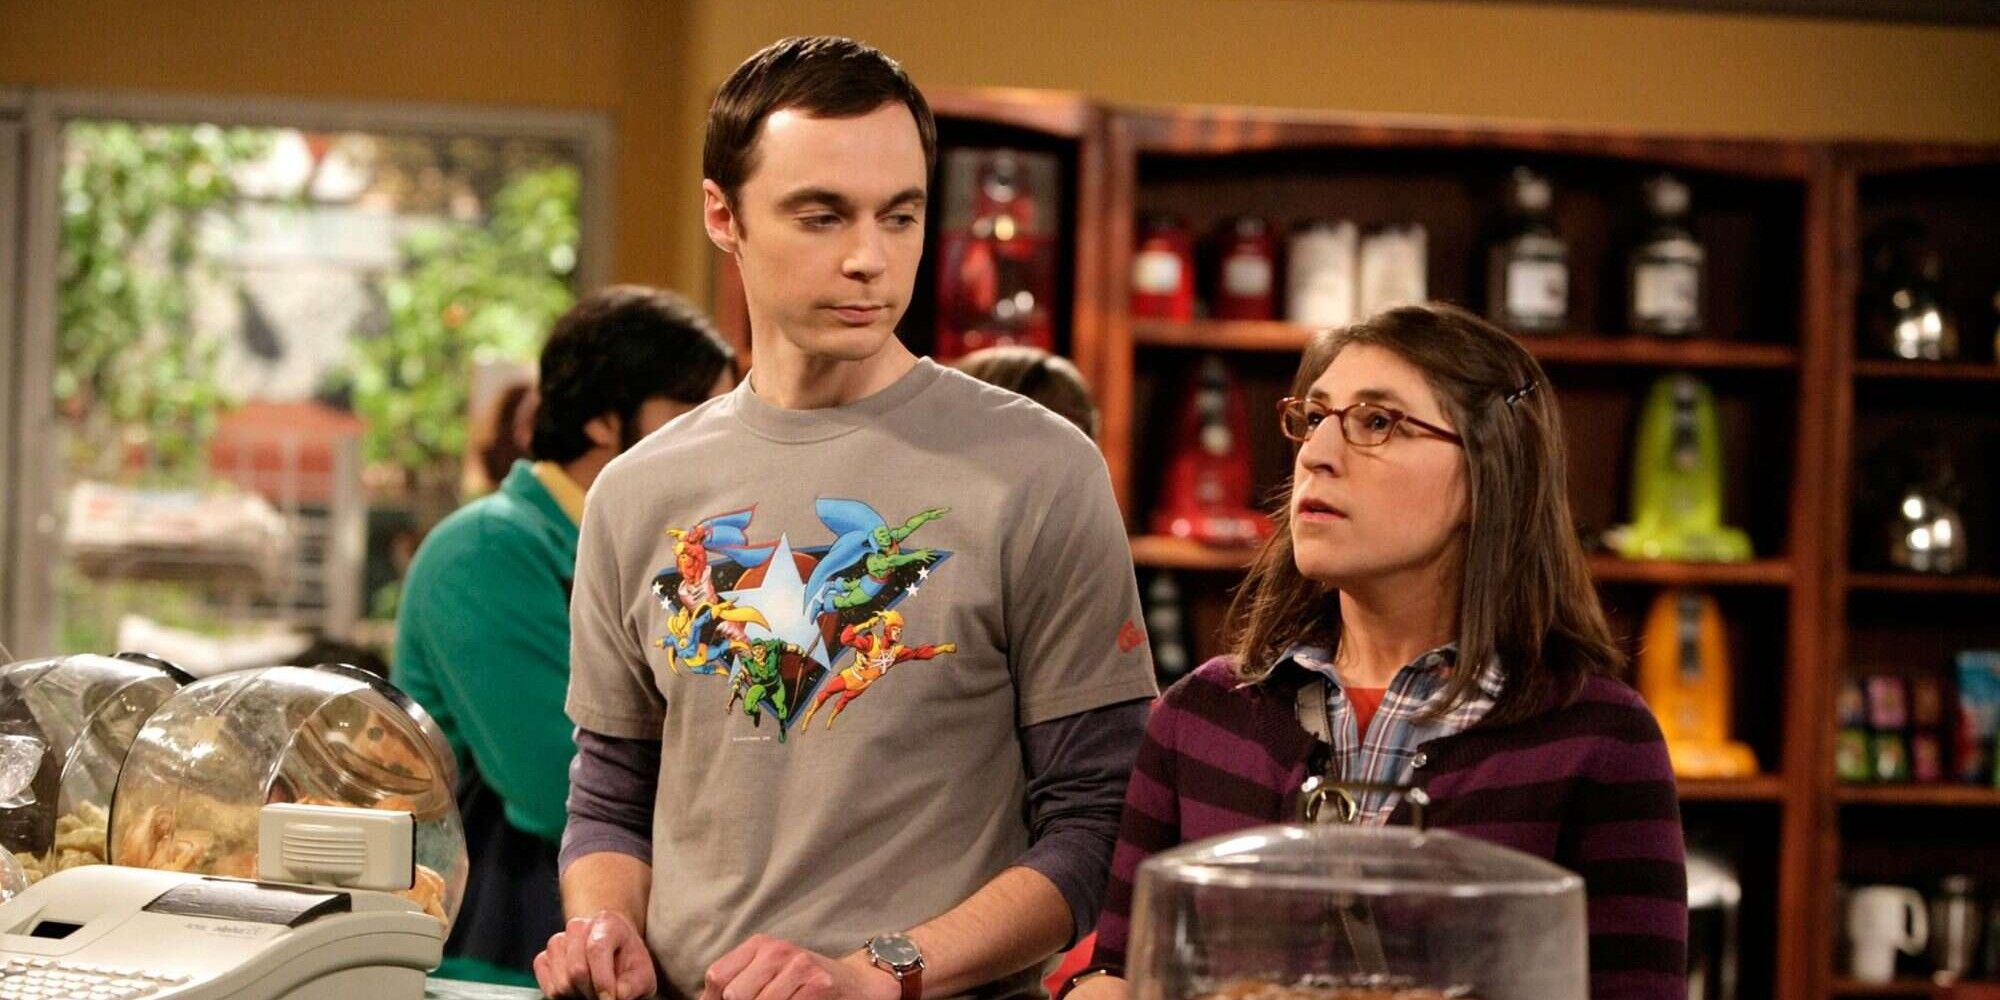 Adorable 11-Year-Old Big Bang Theory Image Will Make You Nostalgic For Young Sheldon & Amy